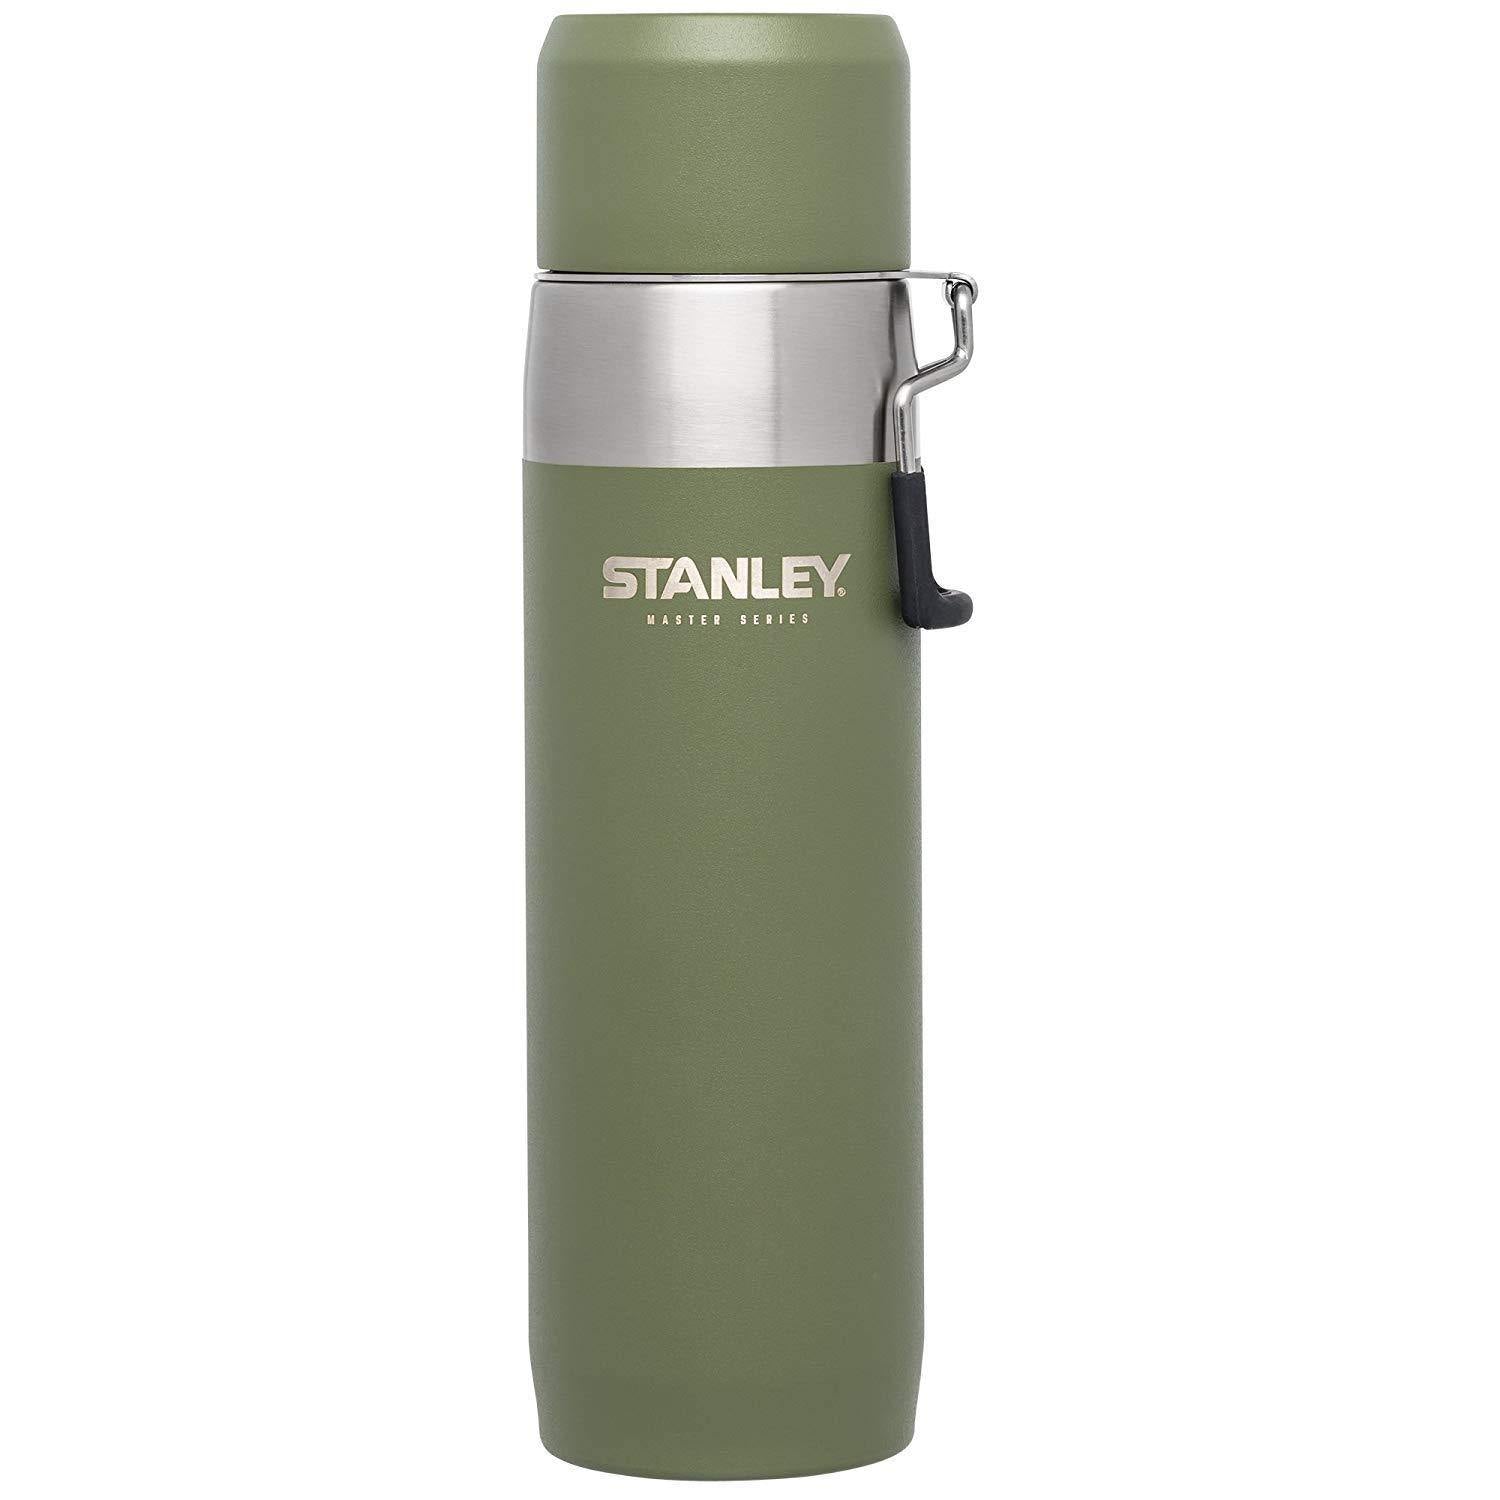 Stanley Master Series Water Bottle 22oz - Olive Drab / 22oz